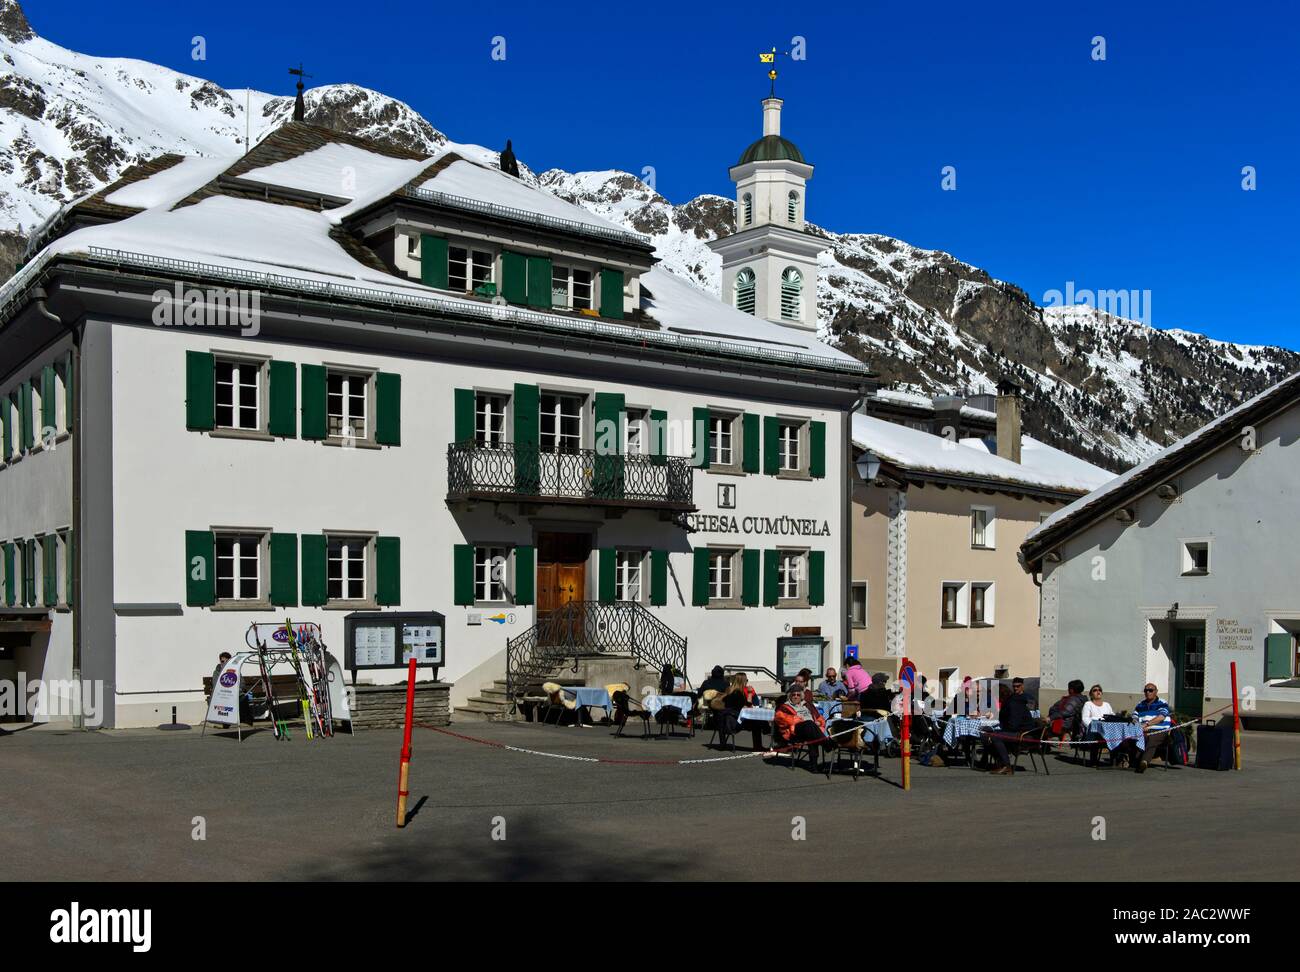 Main square with town hall, Chesa Cumünela, Sils im Engadin, Grisons, Switzerland Stock Photo